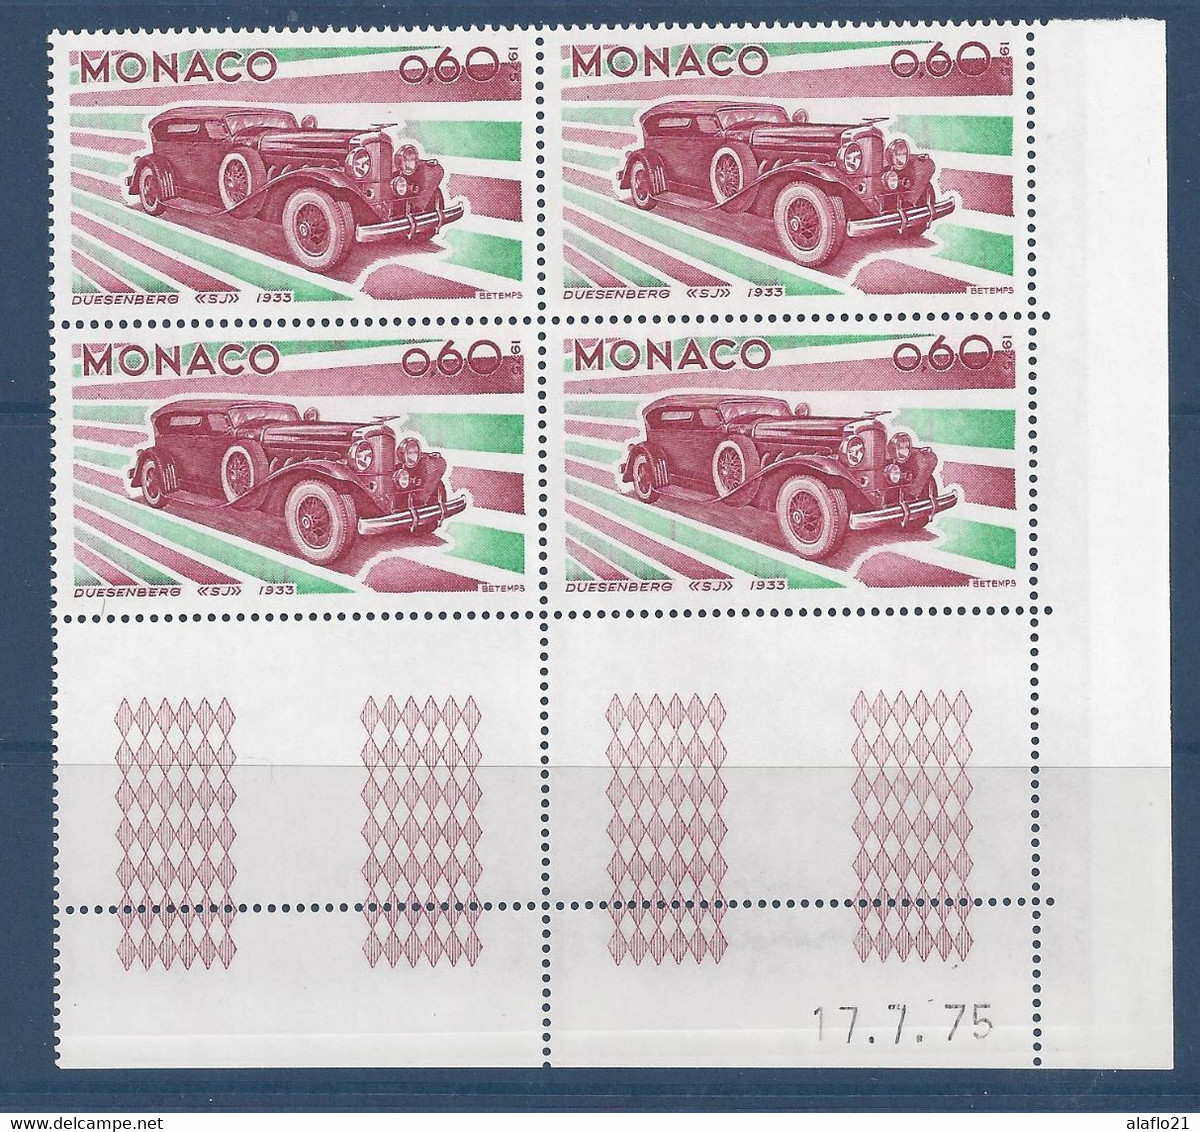 MONACO - N° 1023 - DUESENBERG 1933 - Bloc De 4 COIN DATE - NEUF SANS CHARNIERE - 17/7/75 - Nuovi